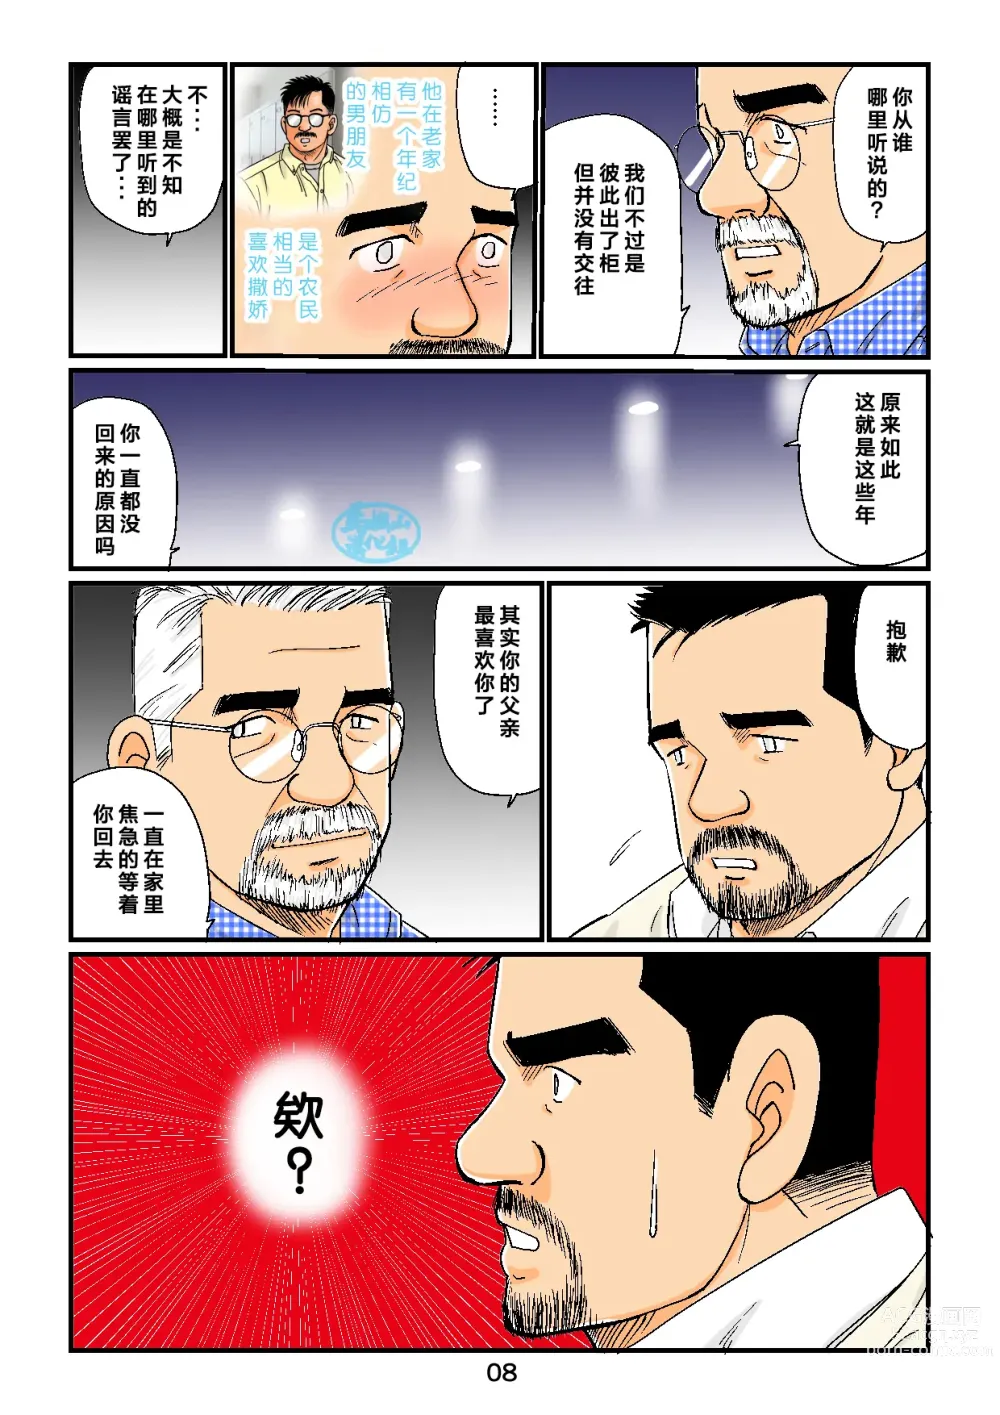 Page 8 of manga 「铁道员的浪漫」 第三回 站长与铁道员之夜